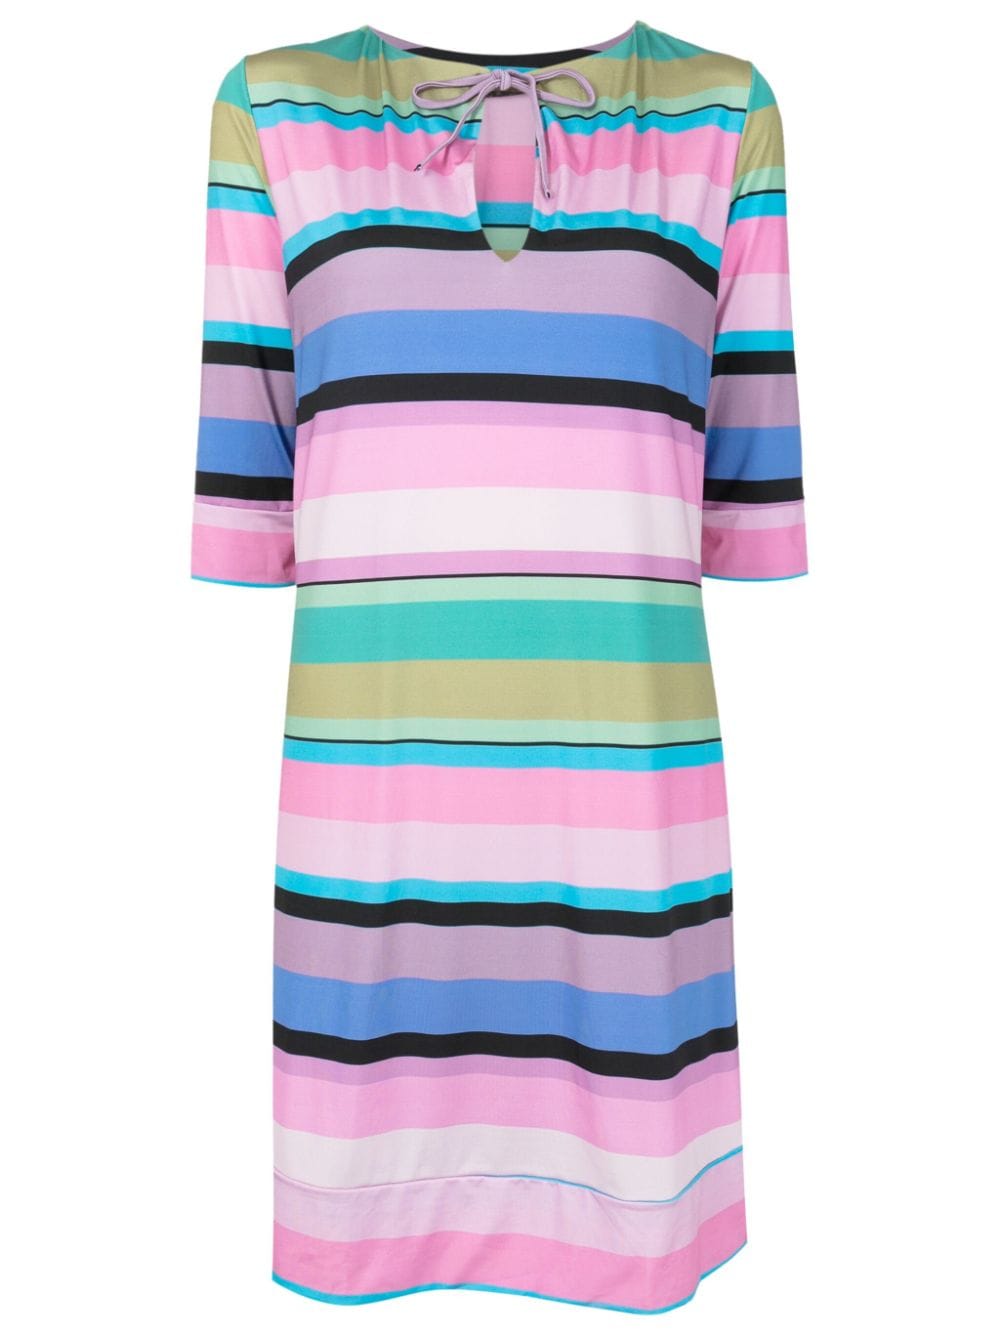 Morell striped dress